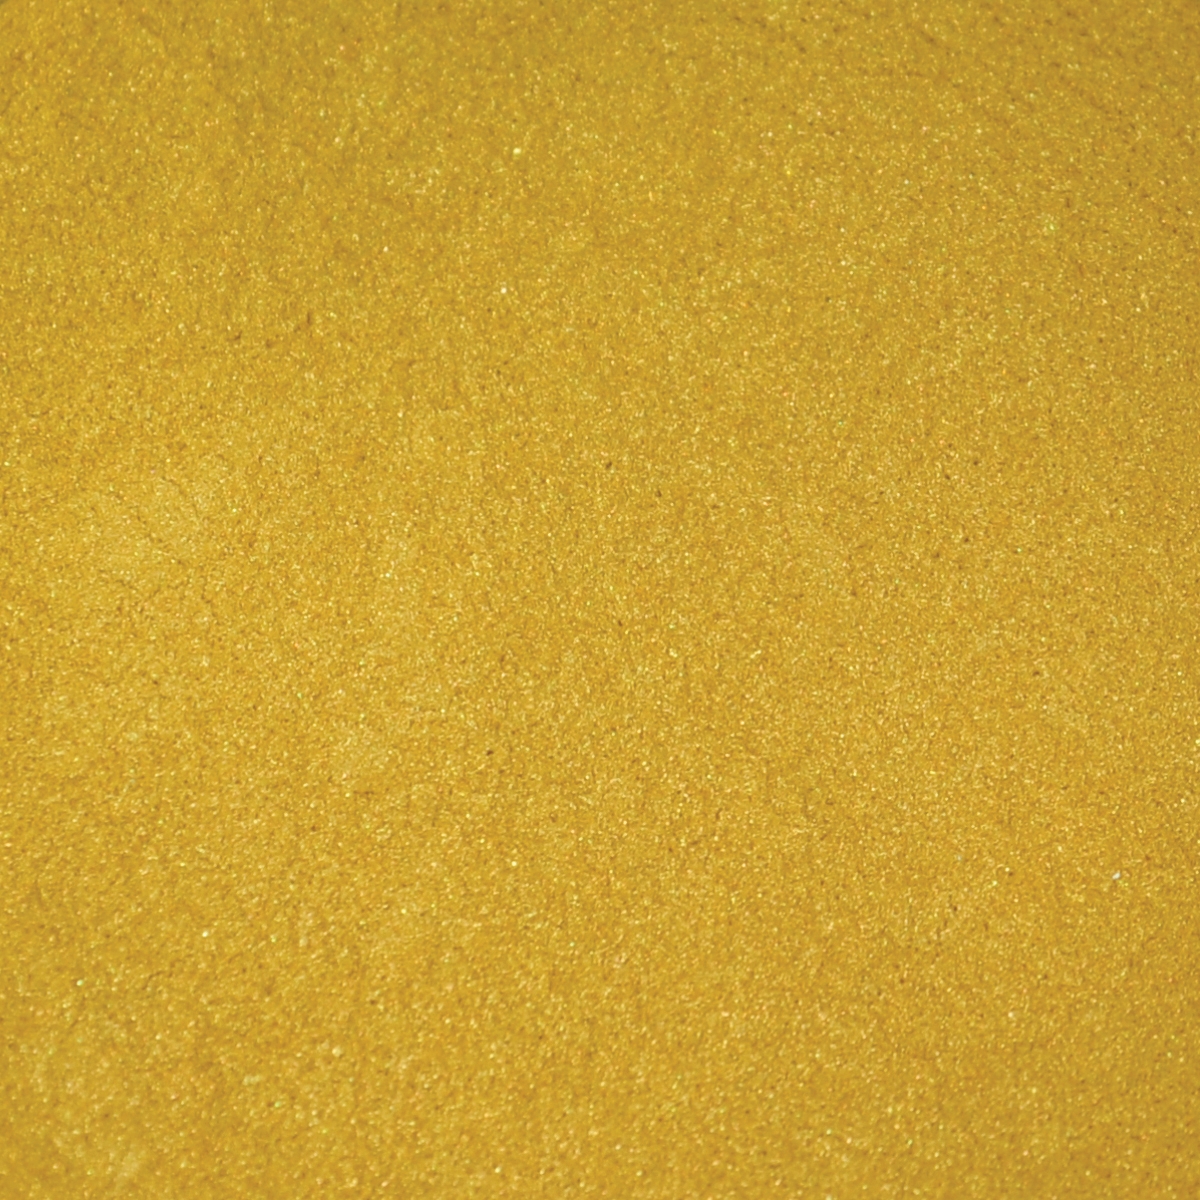 Luster Dust : Gold 4g